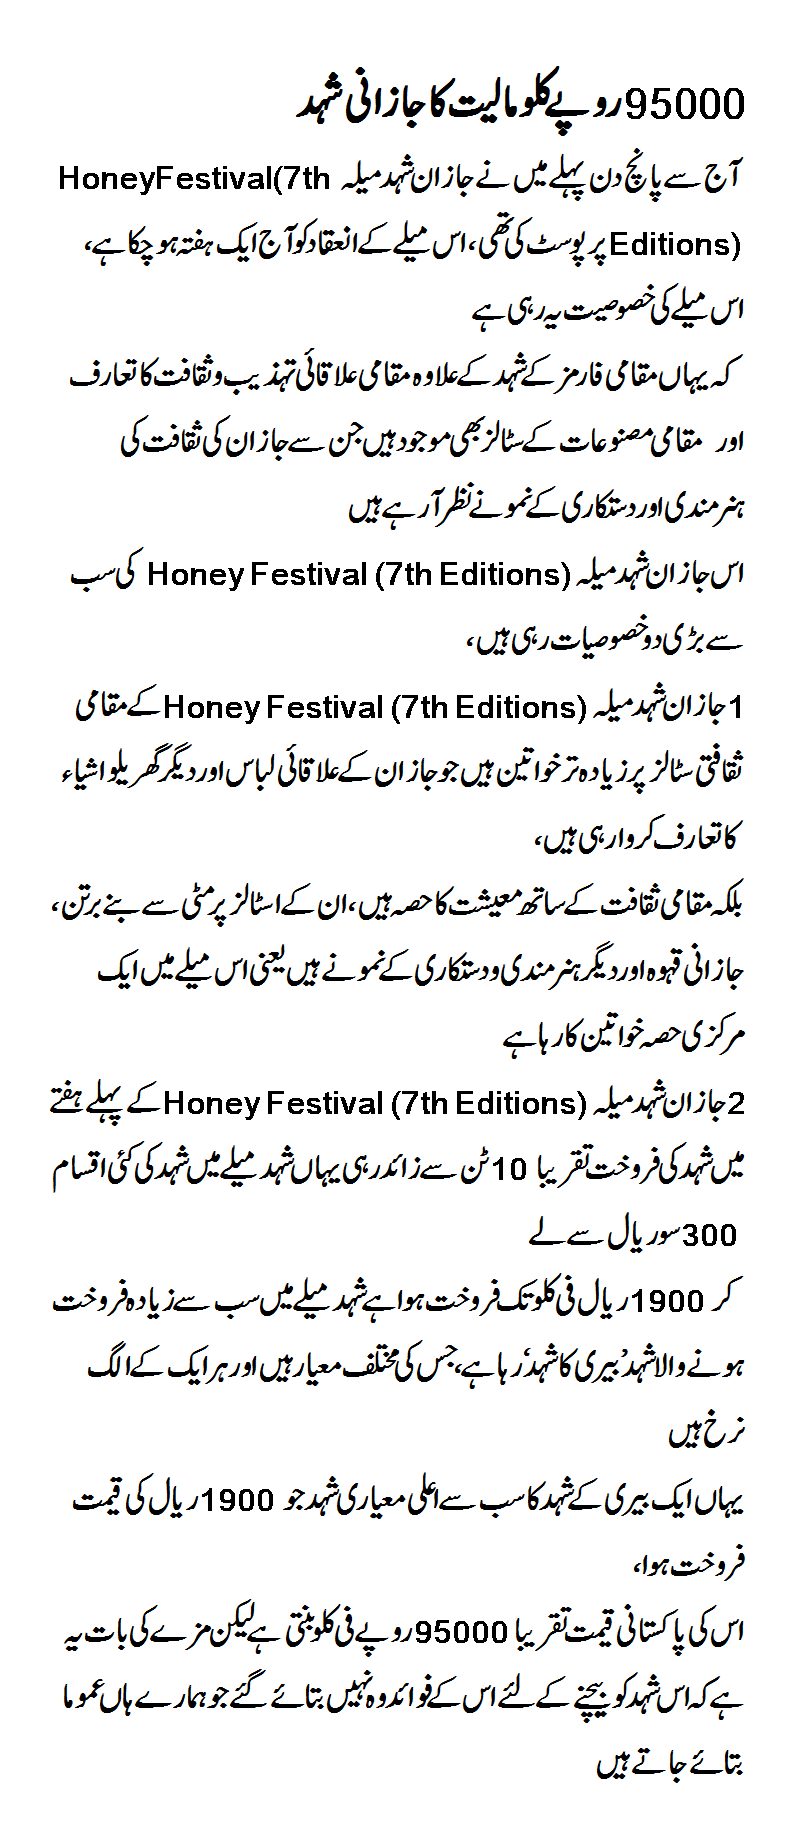 Jazani honey worth Rs. 95,000 per kg